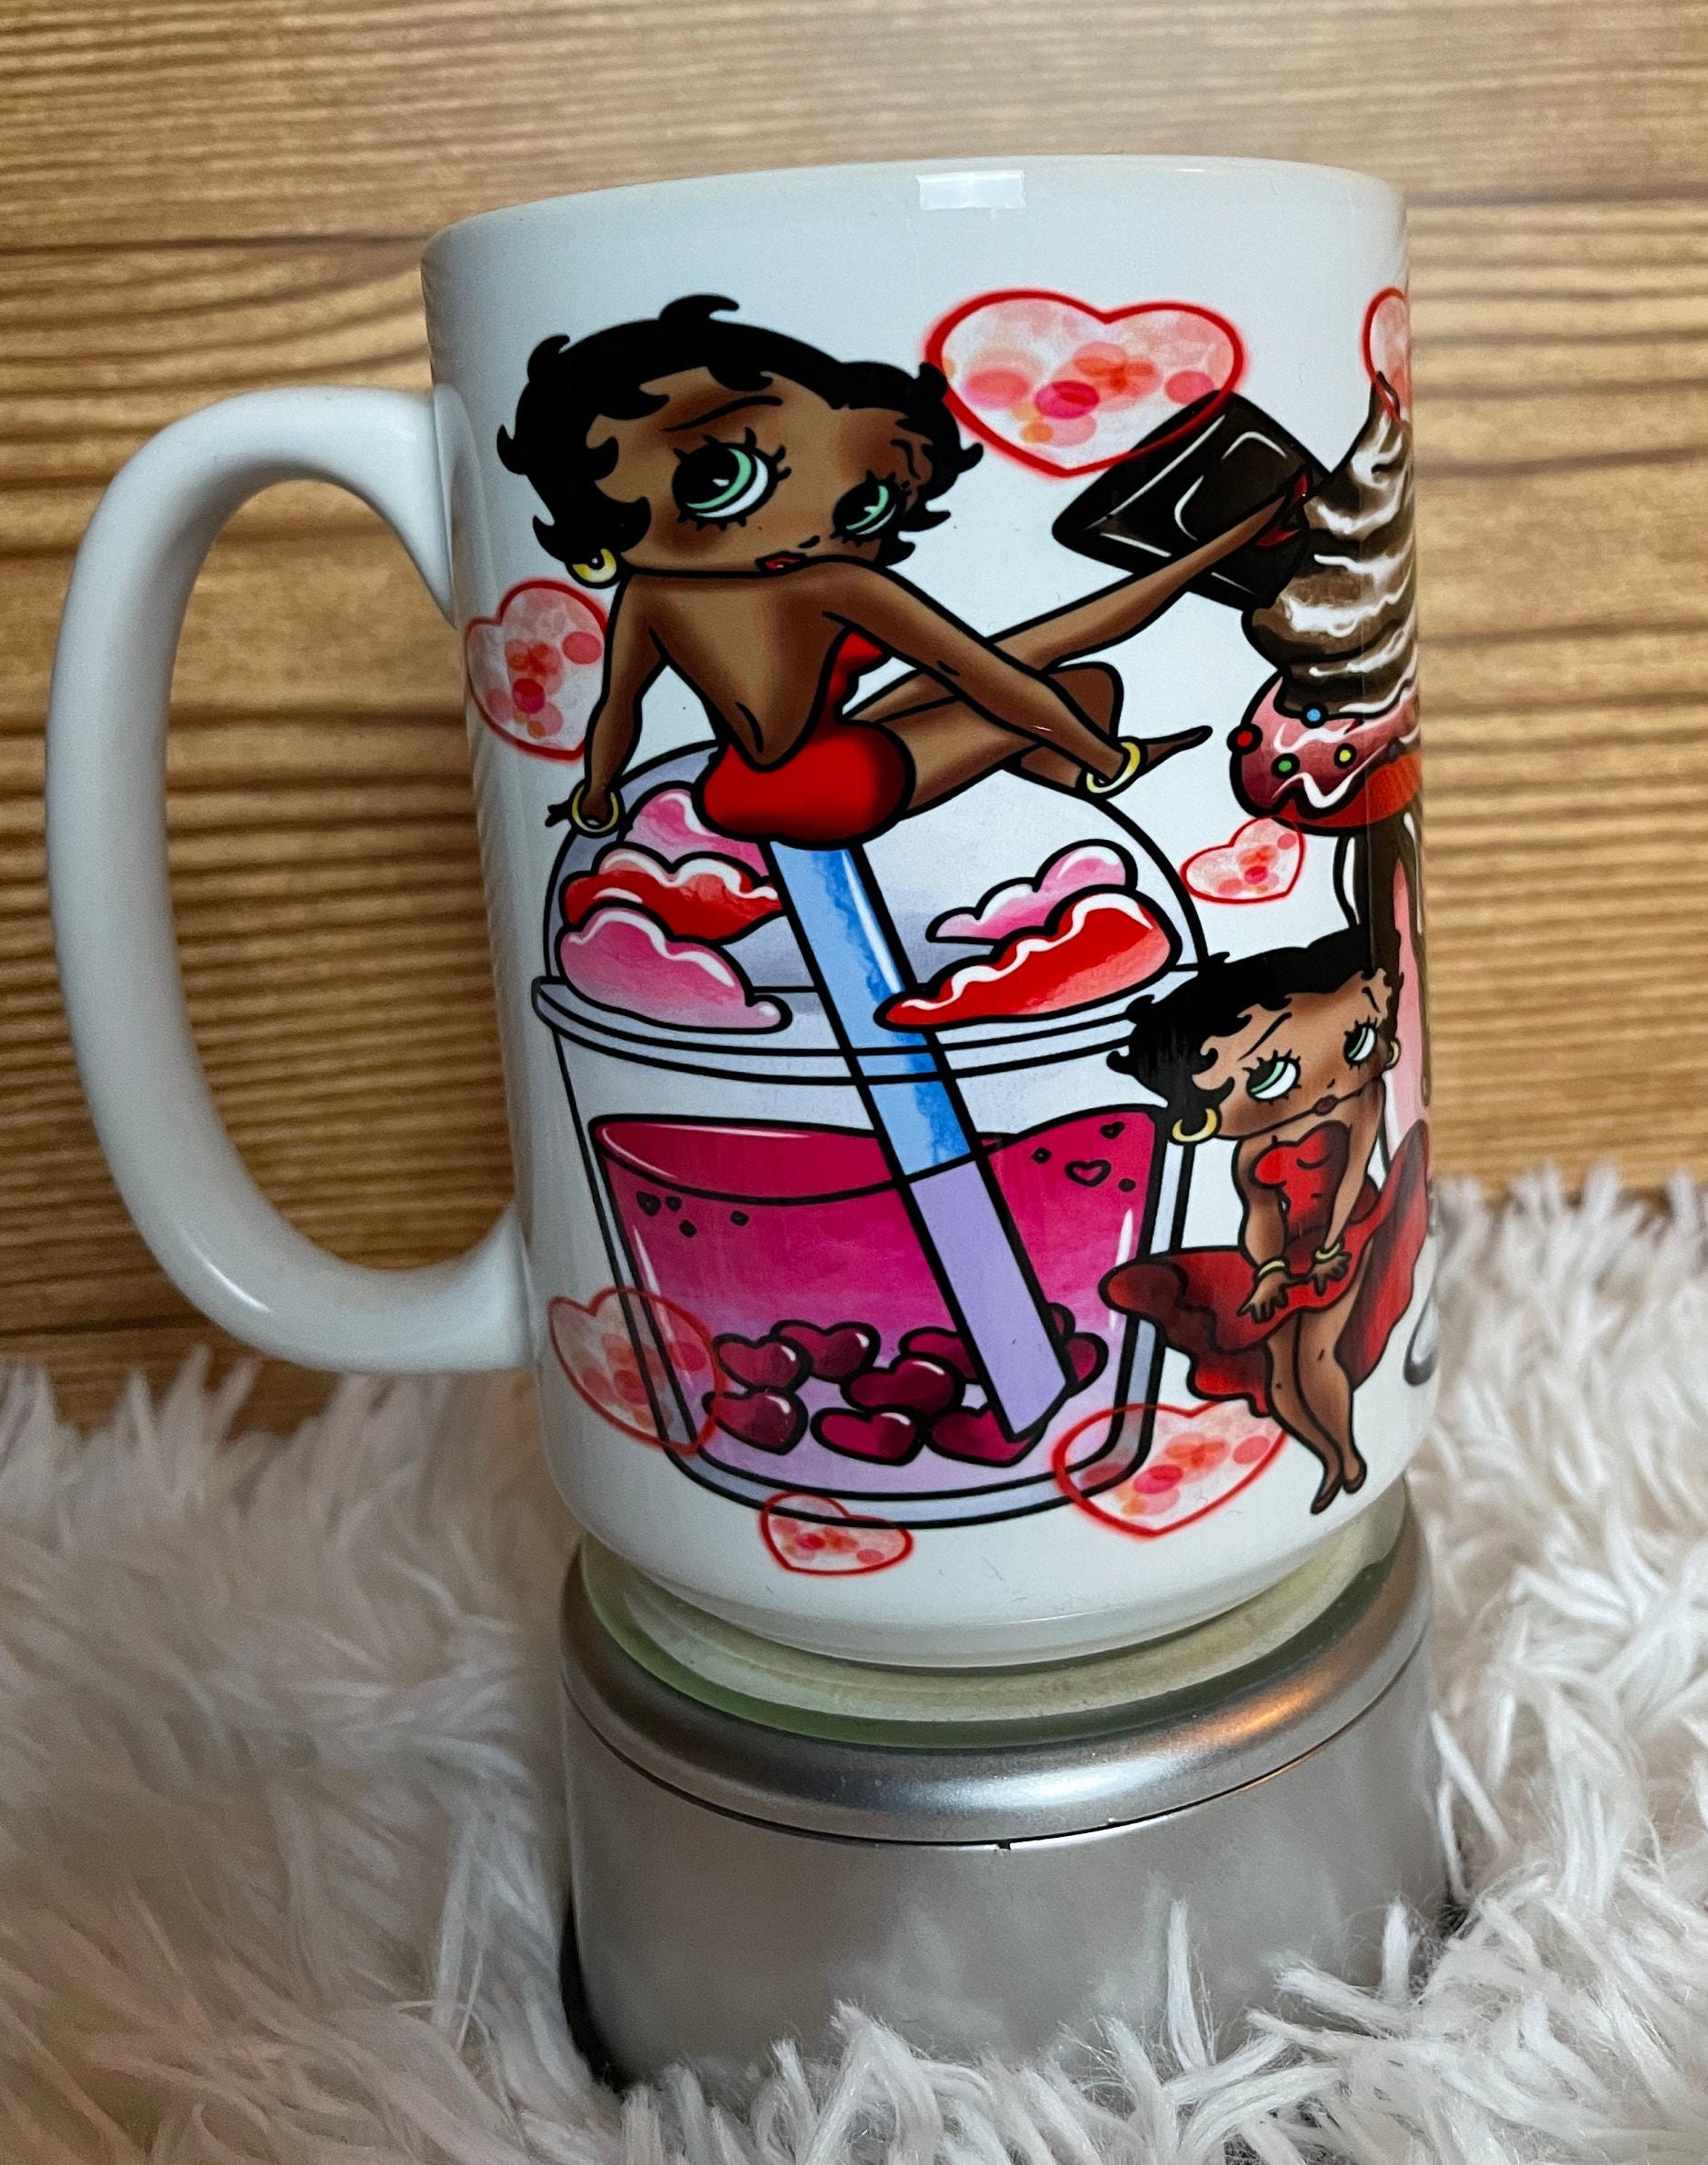 Betty Boop Coffee Mug for Sale by brandizzle84